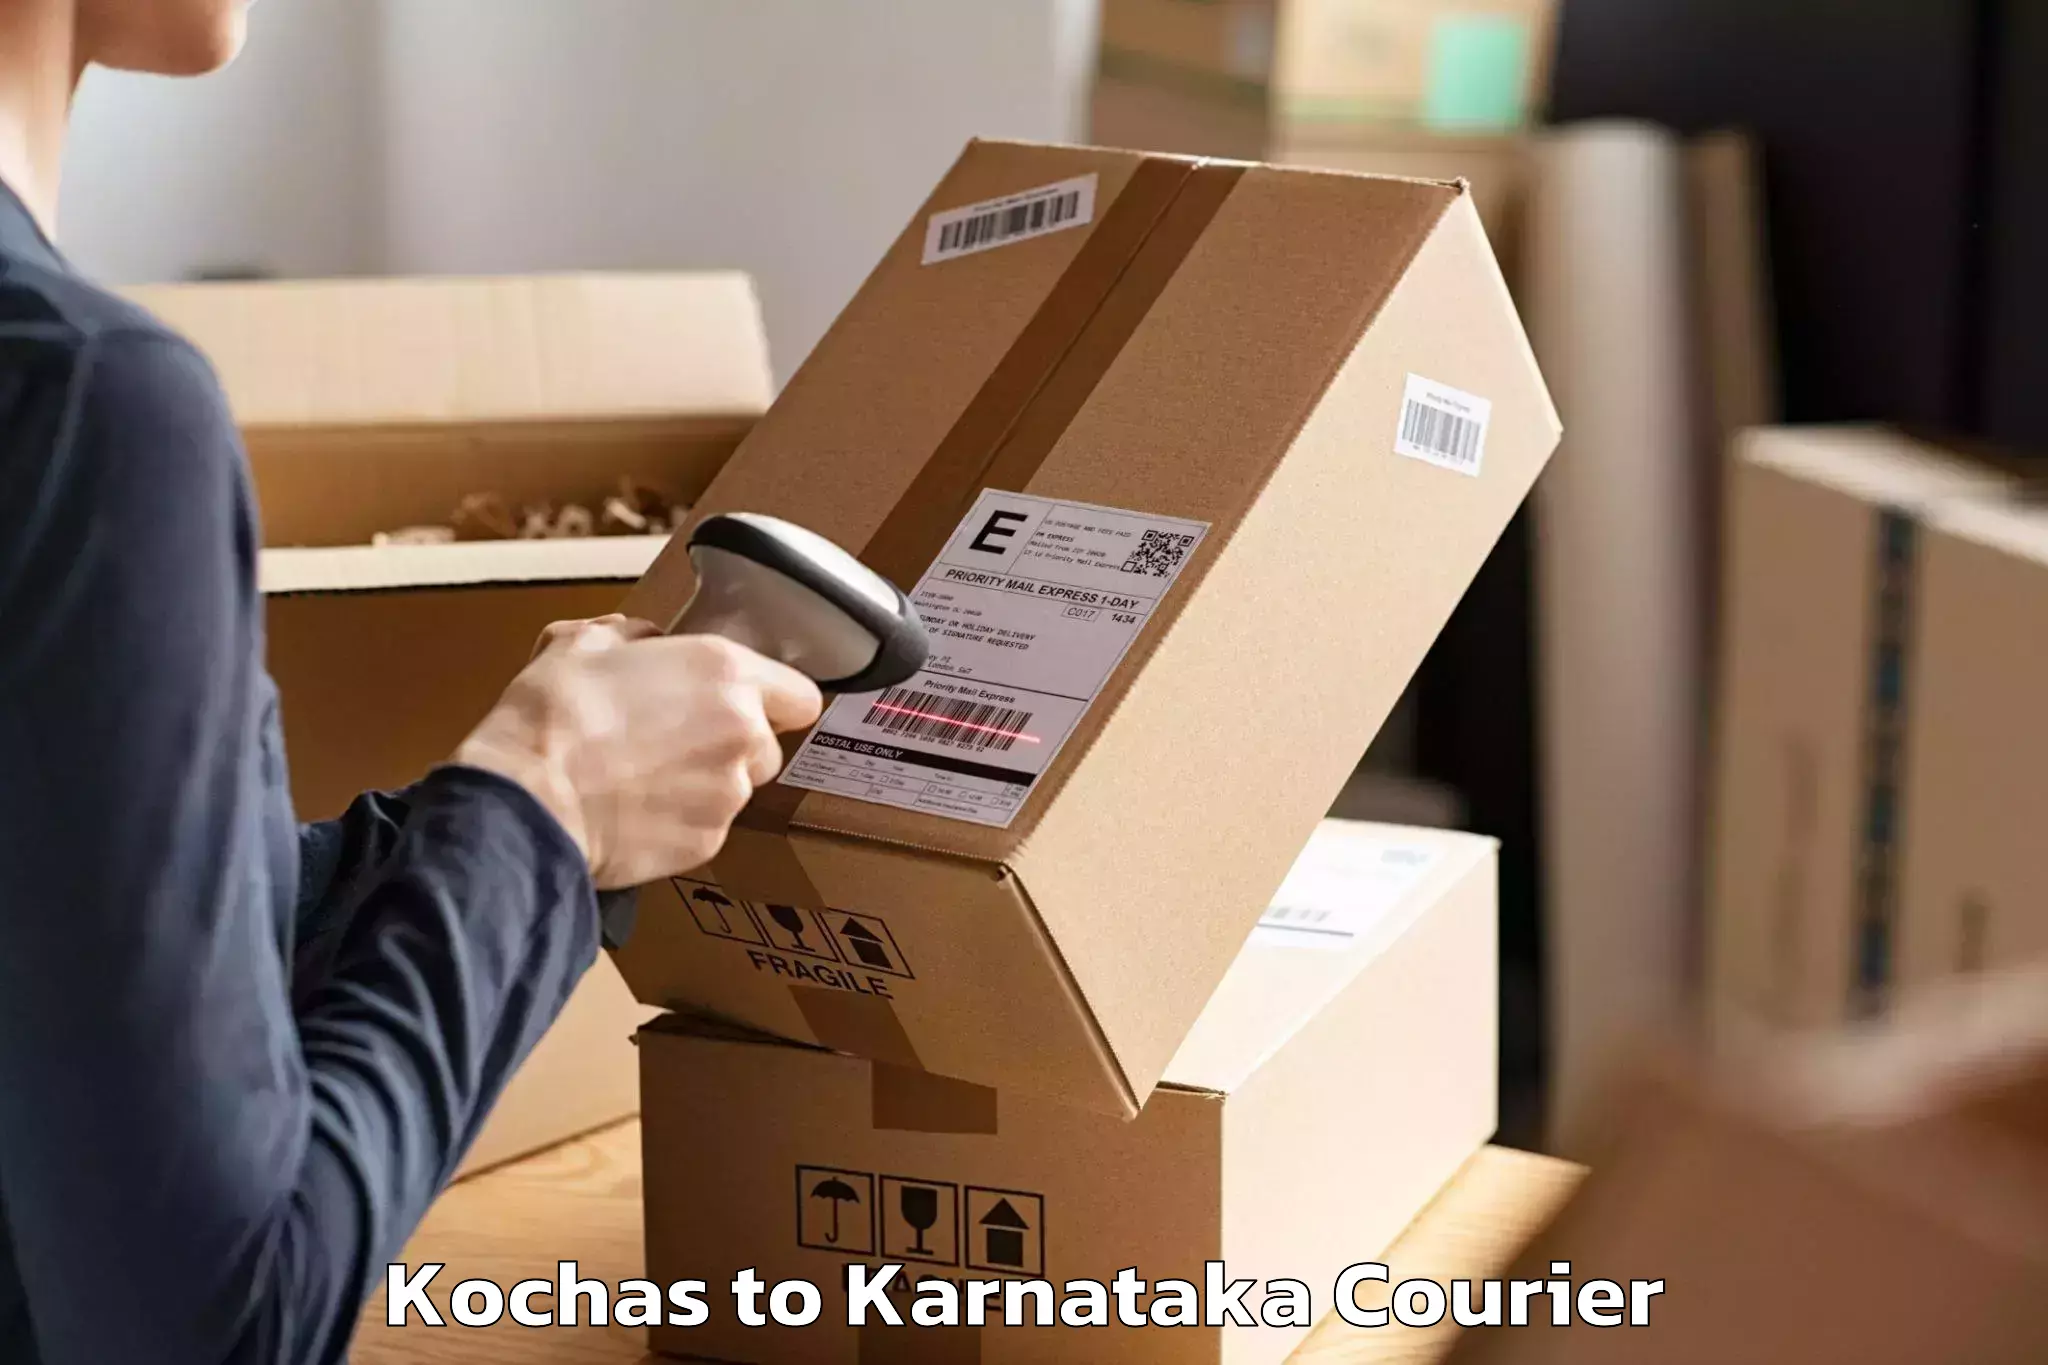 Furniture delivery service Kochas to Ramanathapura